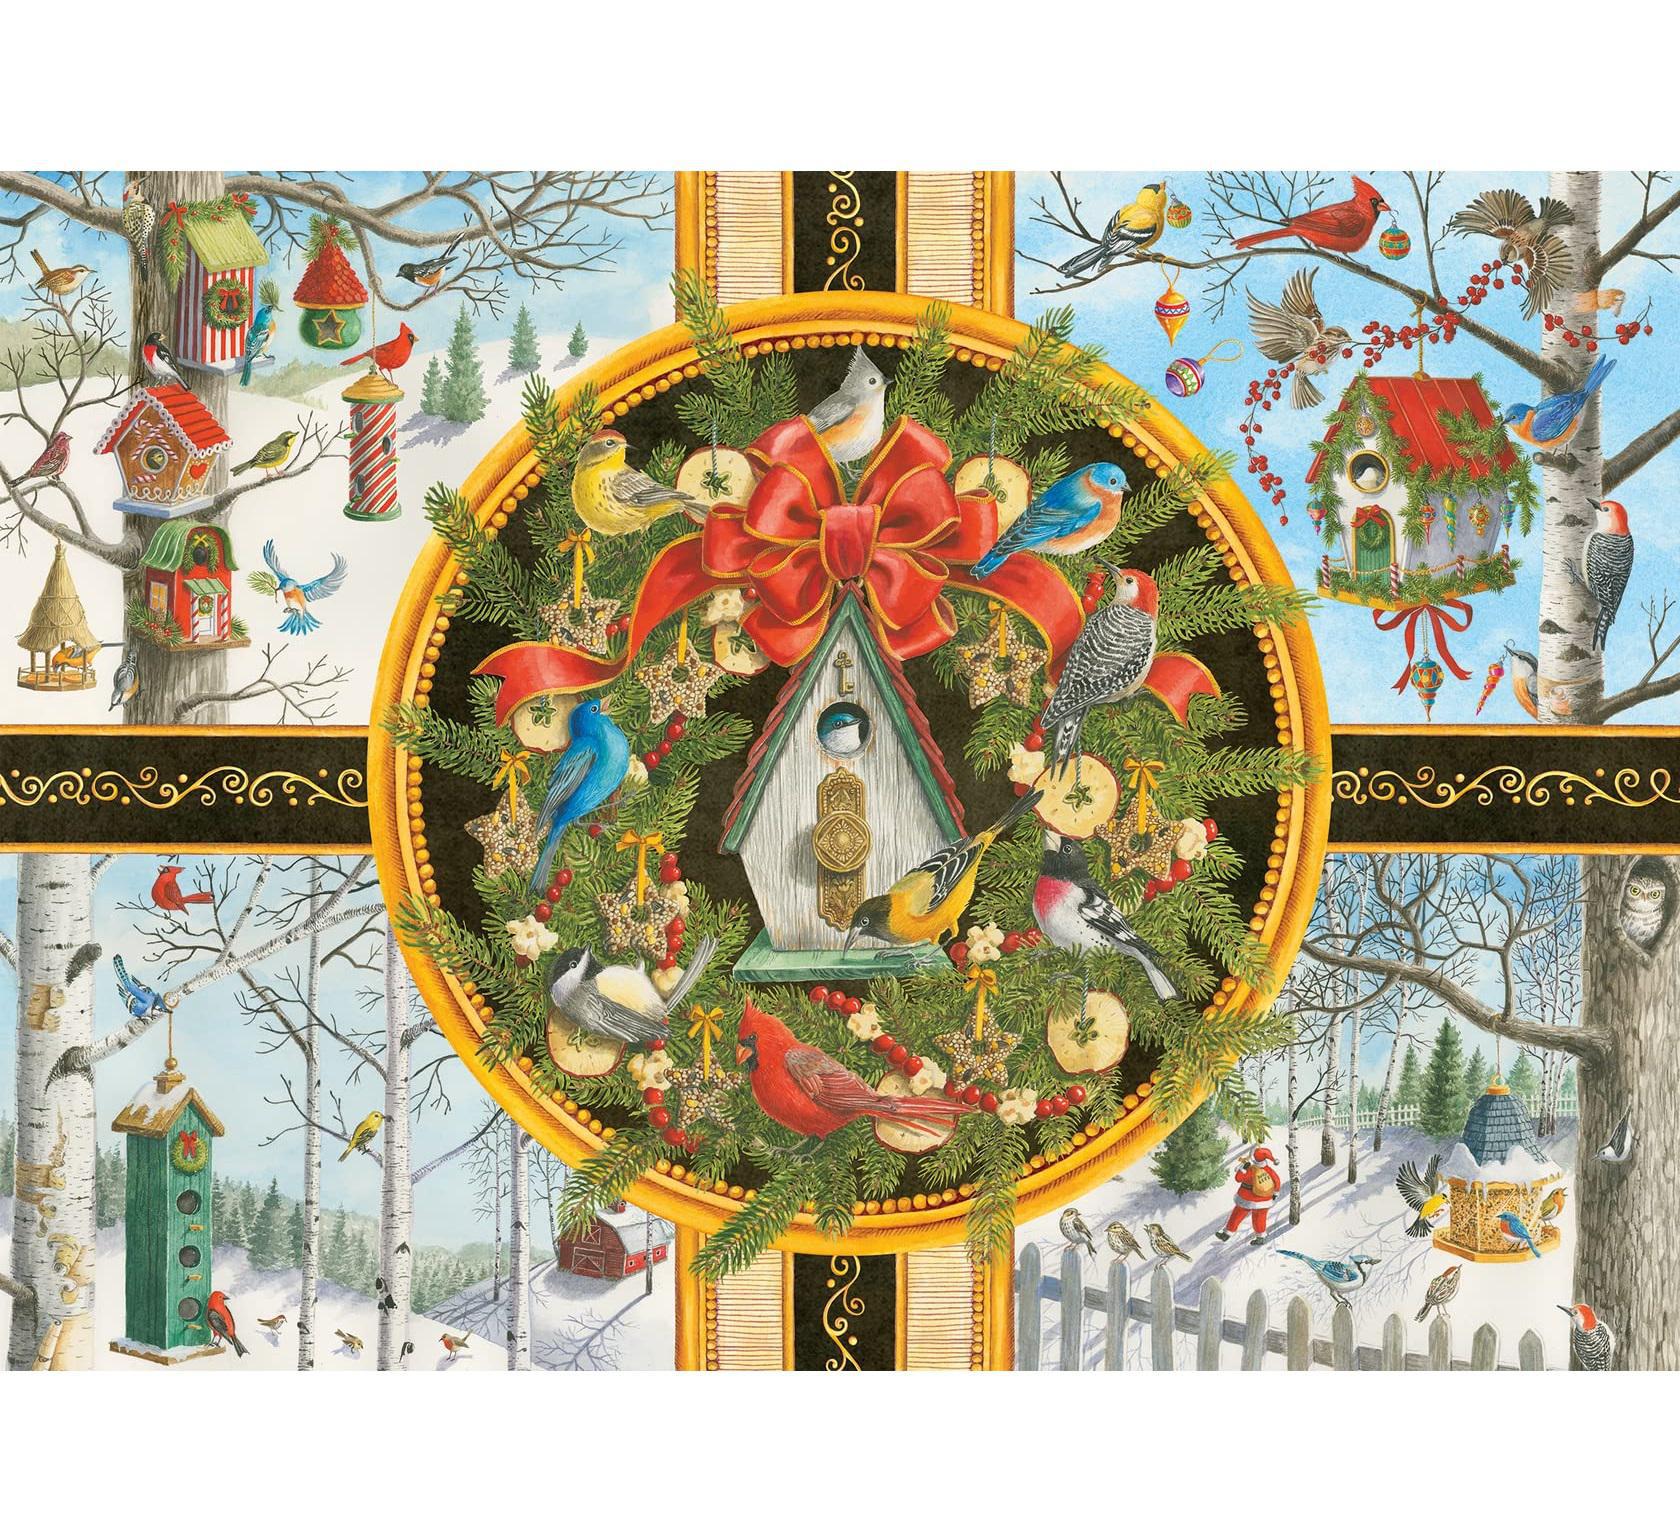 Ravensburger Jigsaw Puzzle | Christmas Songbirds 500 Piece